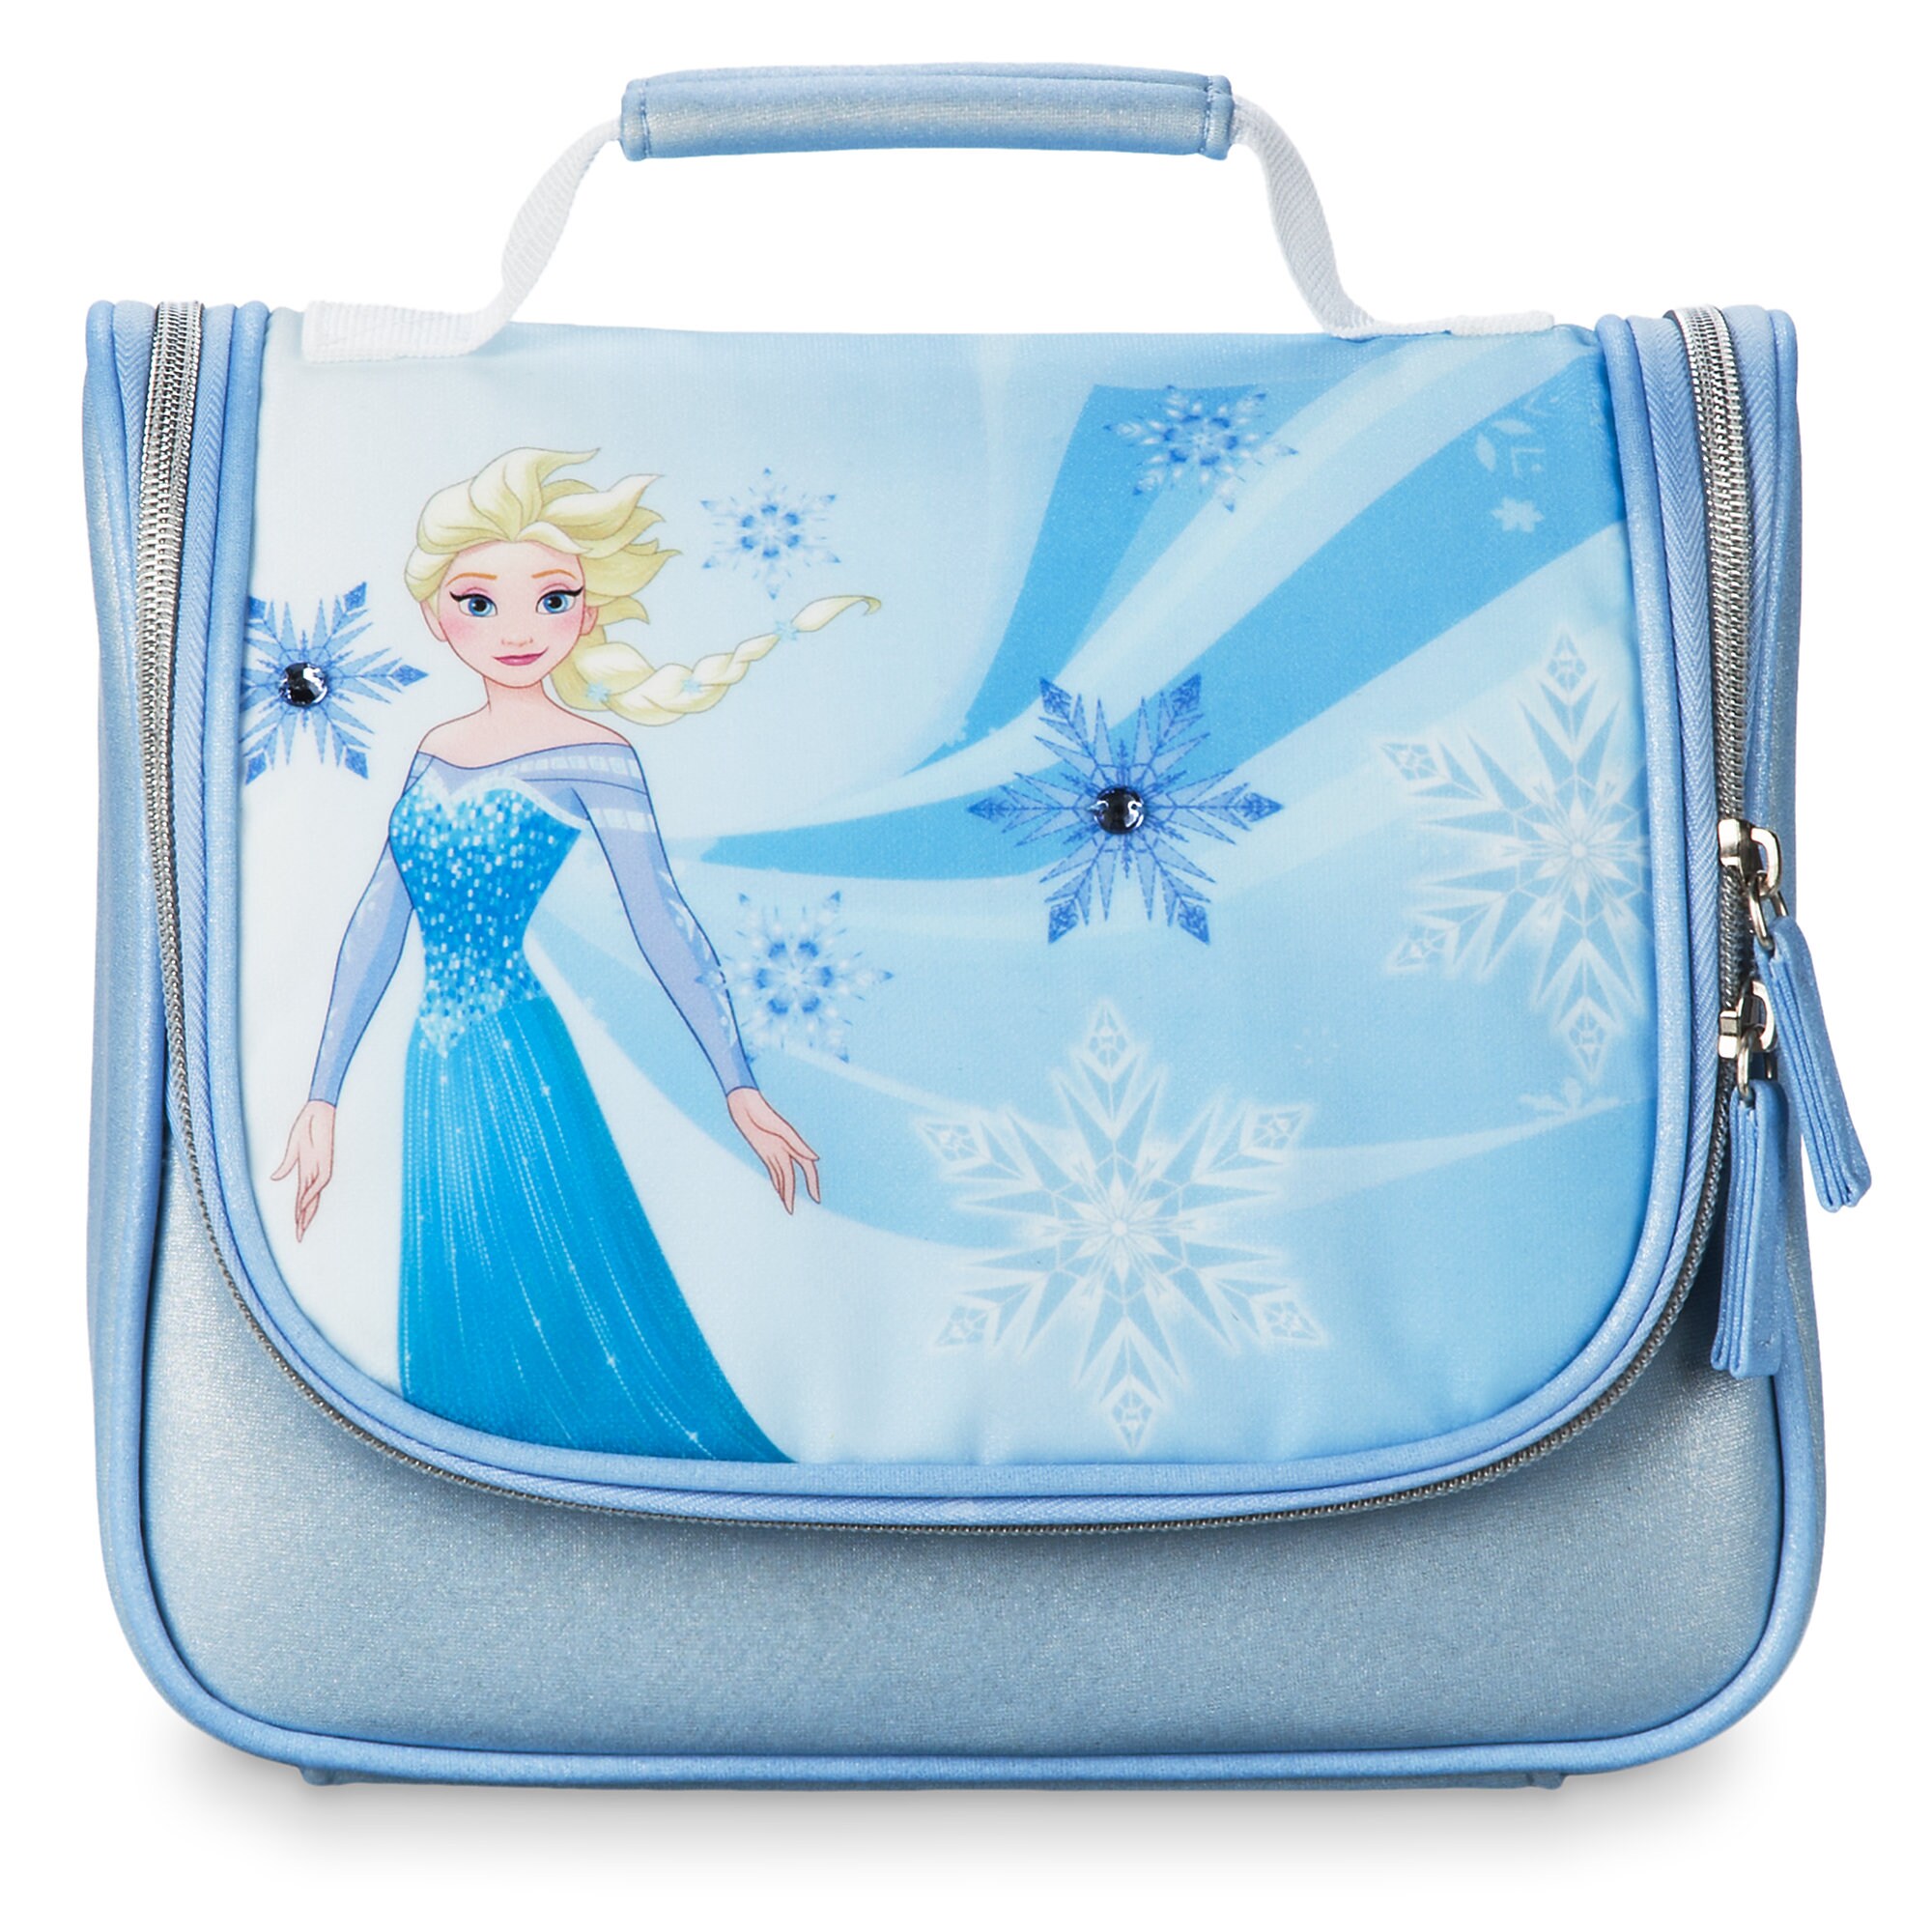 Elsa Lunch Tote for Kids - Frozen